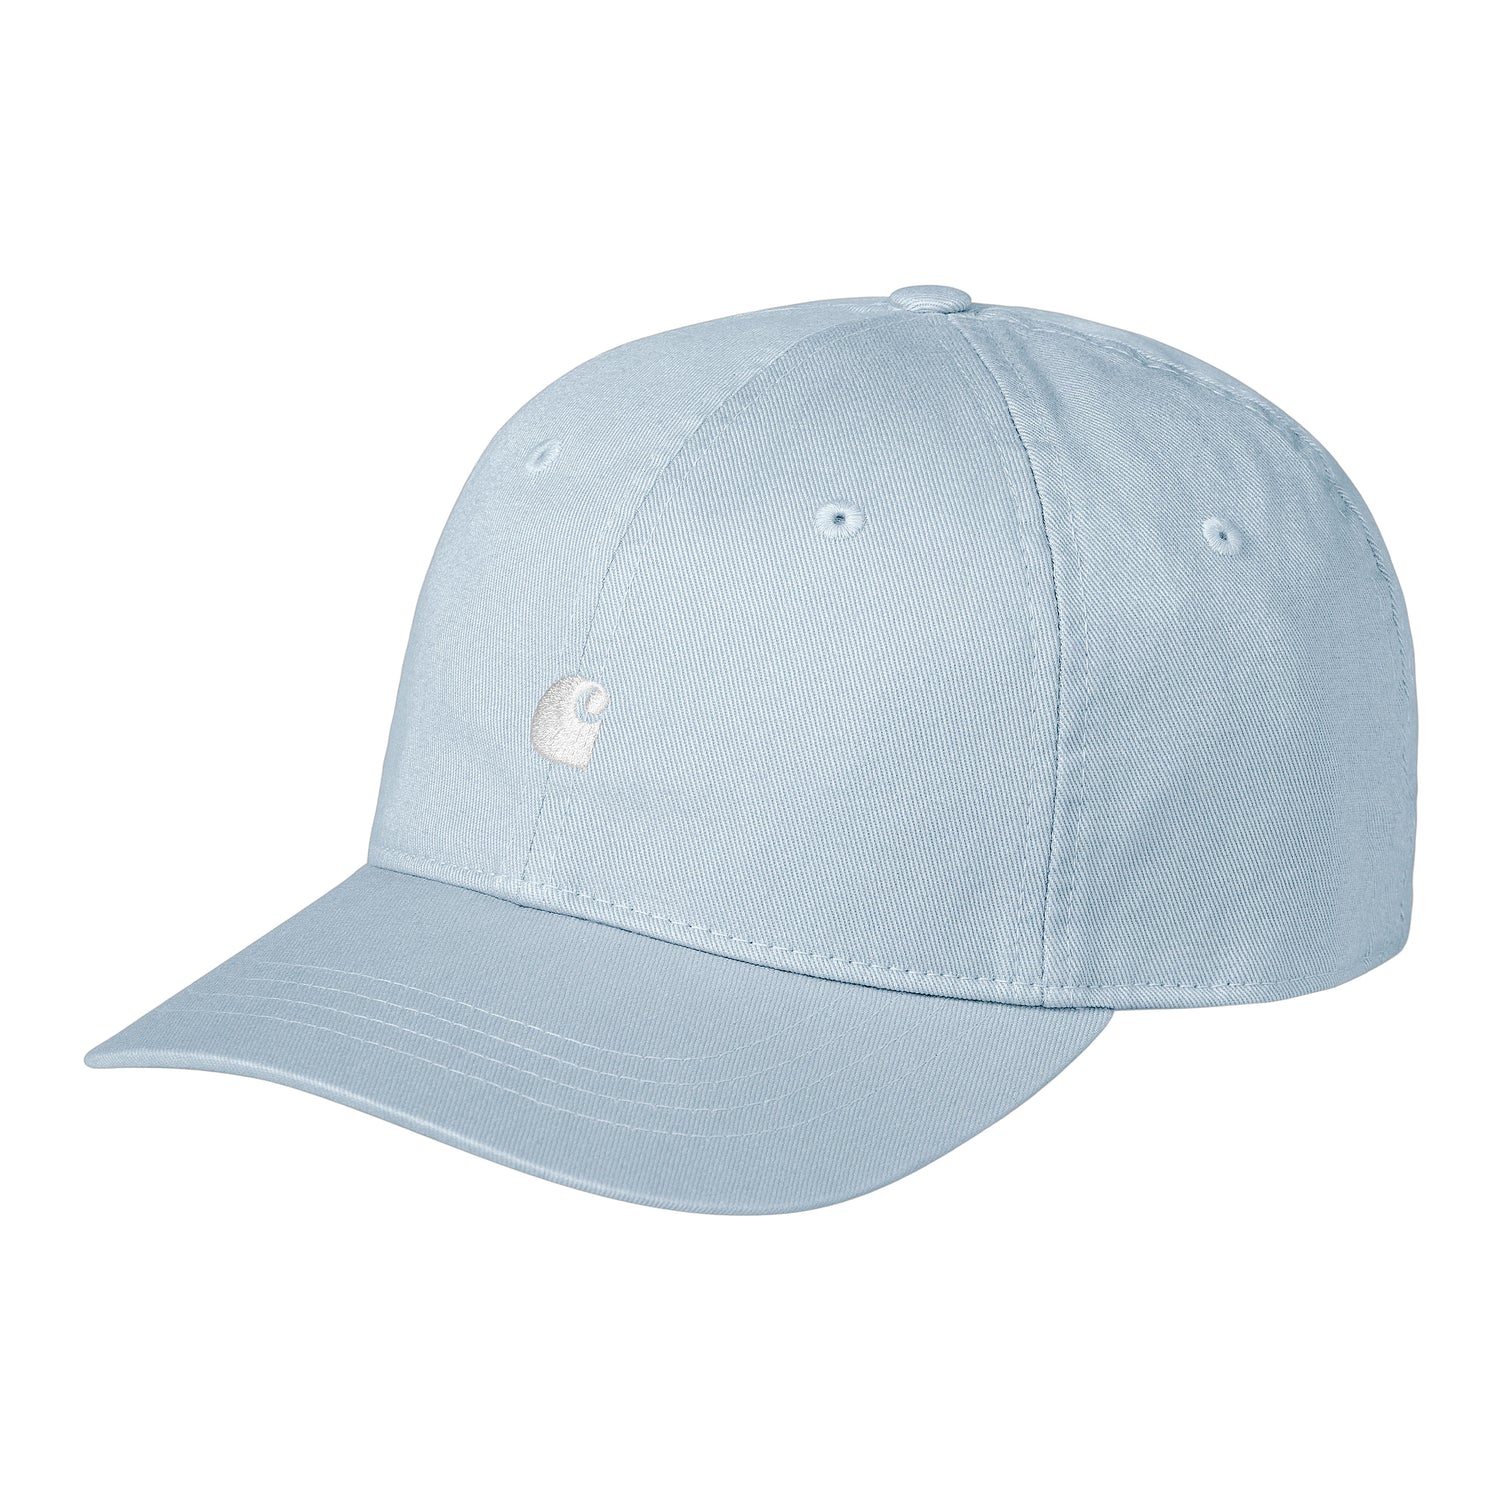 MADISON LOGO CAP FROSTED BLUE / WHITE